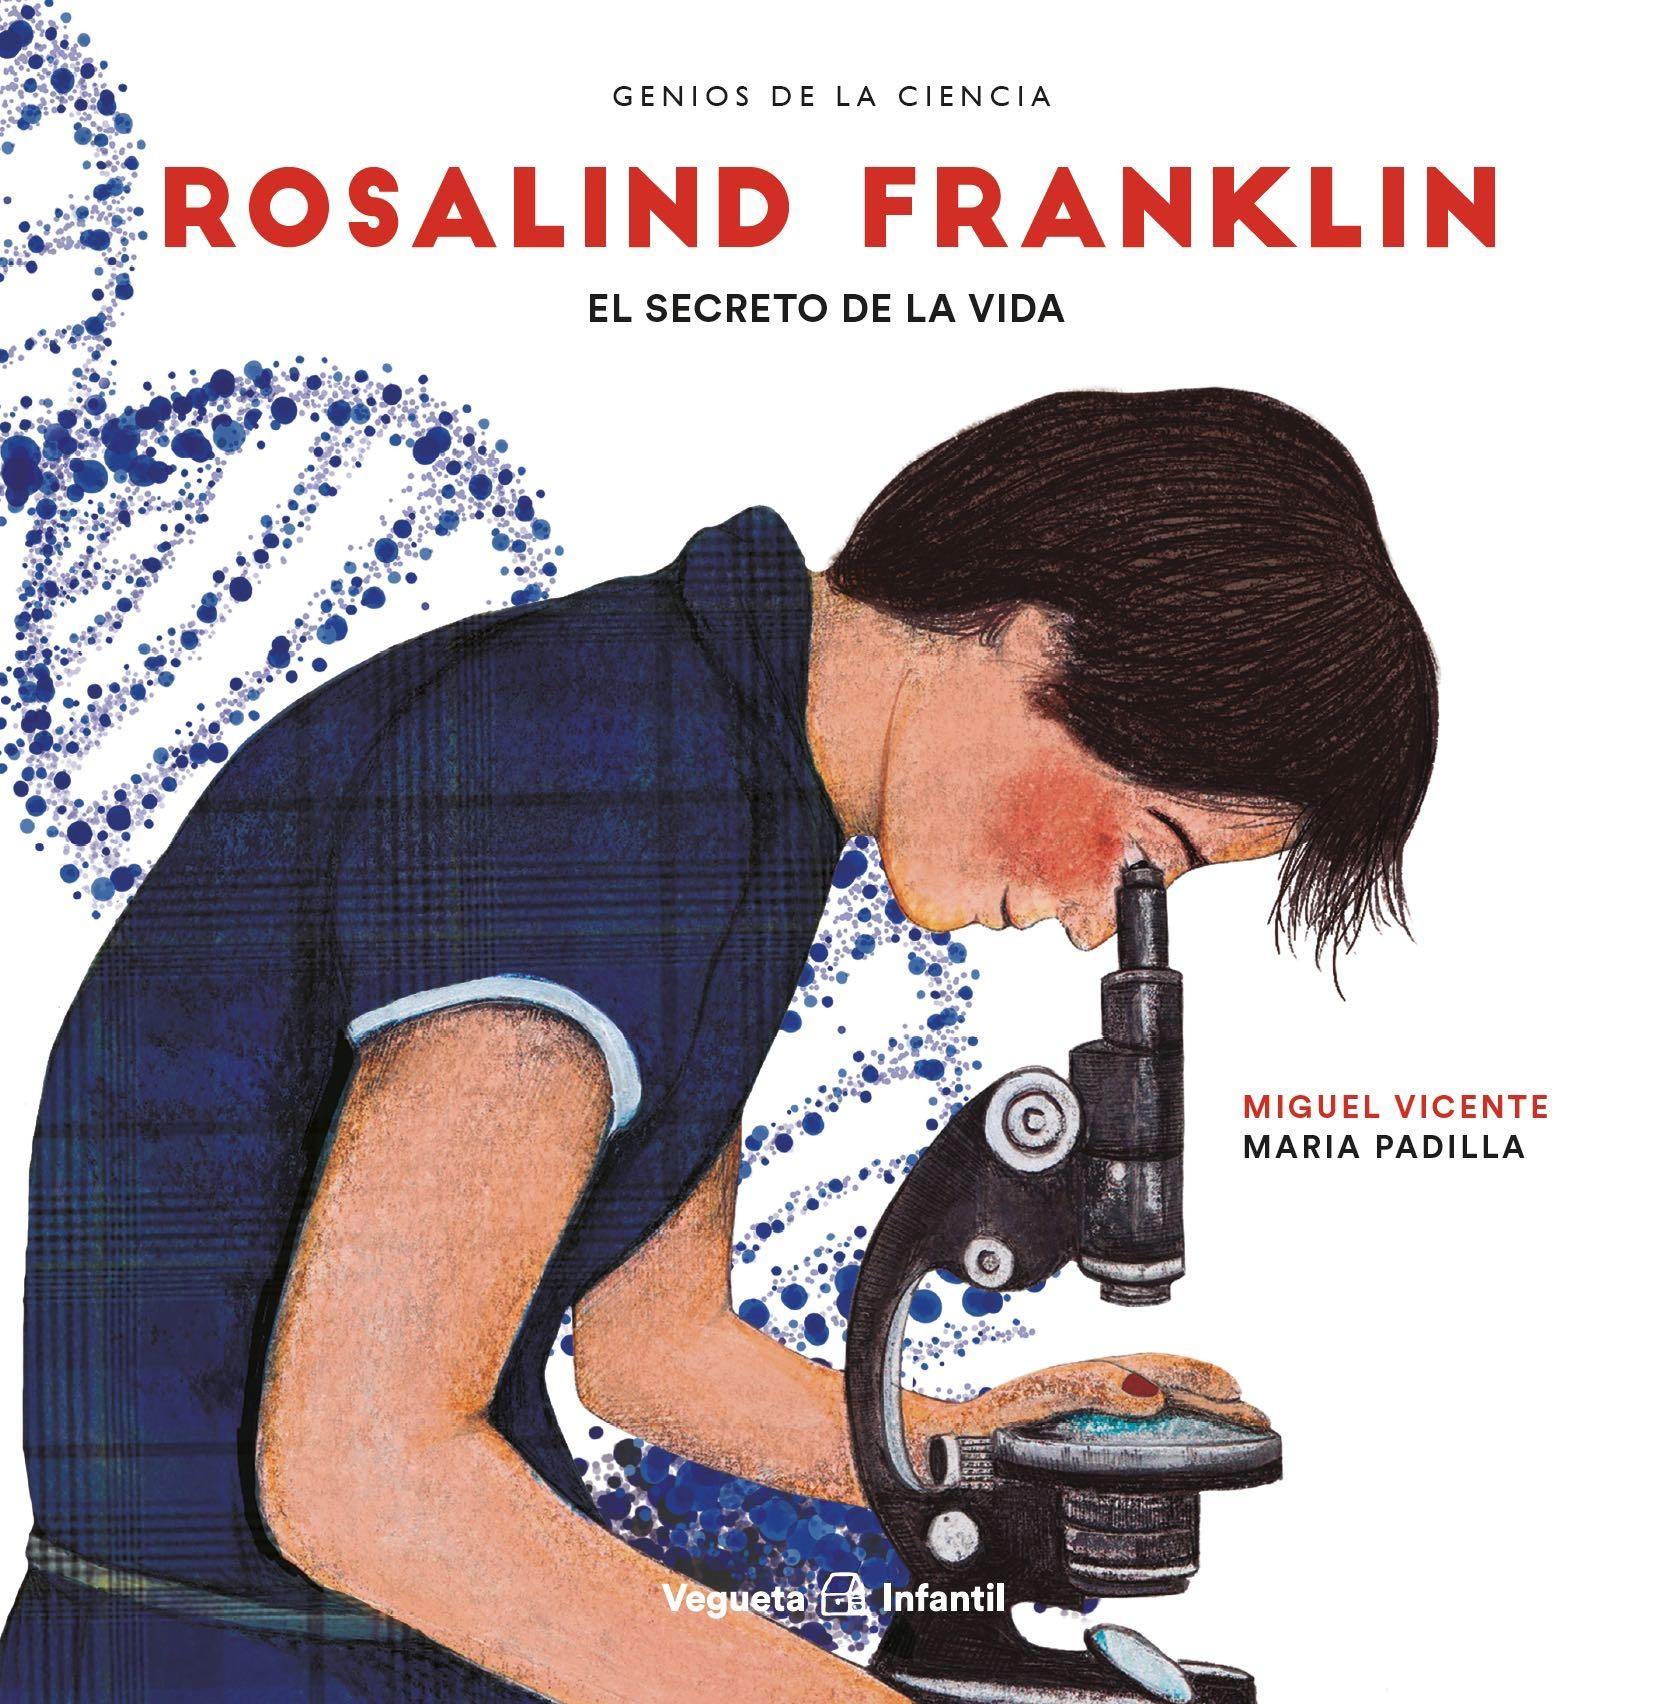 Rosalind Franklin "El Secreto de la Vida". 